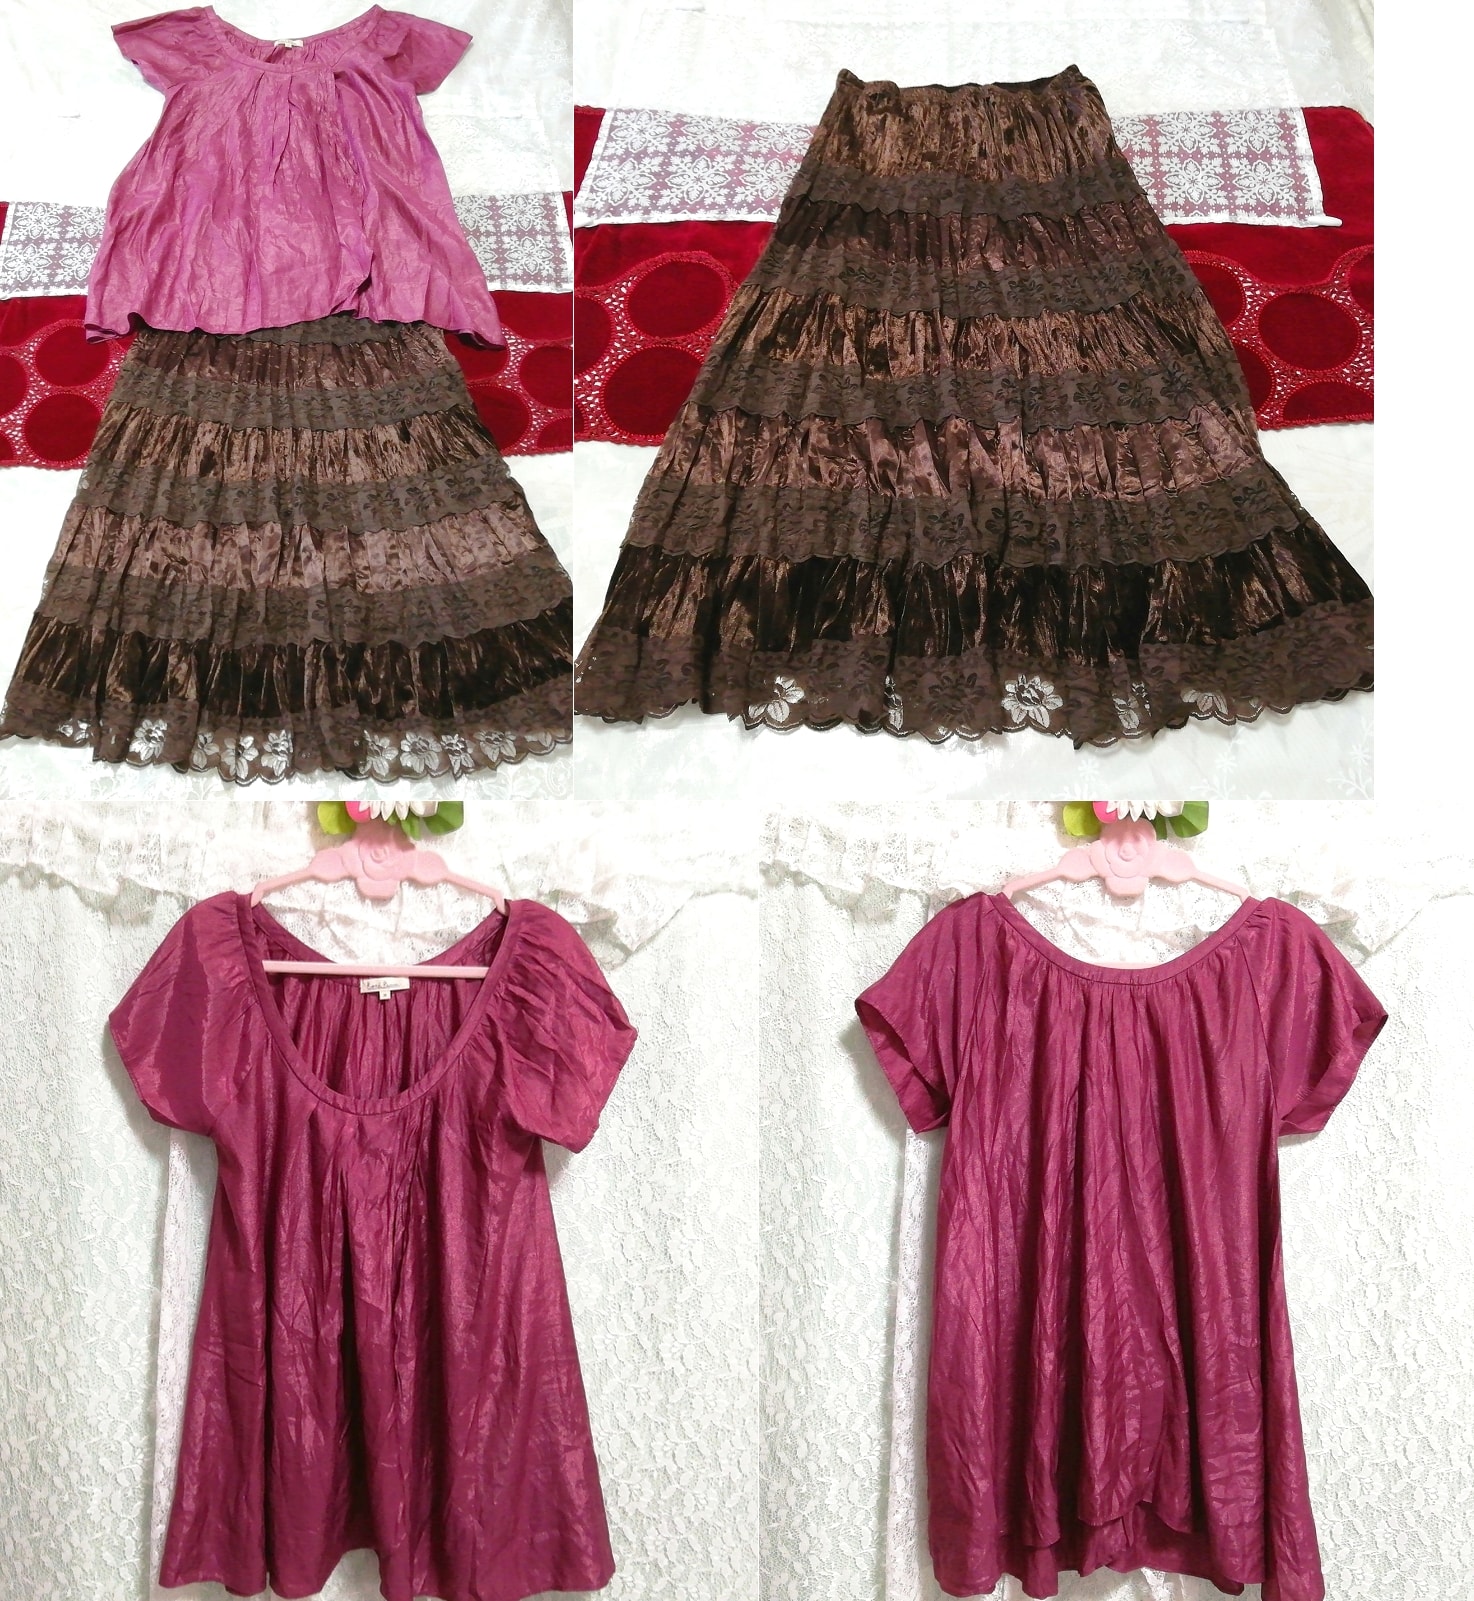 Lila Kurzarm-Tunika-Negligé-Nachthemd, brauner, ausgestellter Spitzenrock, 2 Stück, Mode, Frauenmode, Nachtwäsche, Pyjama